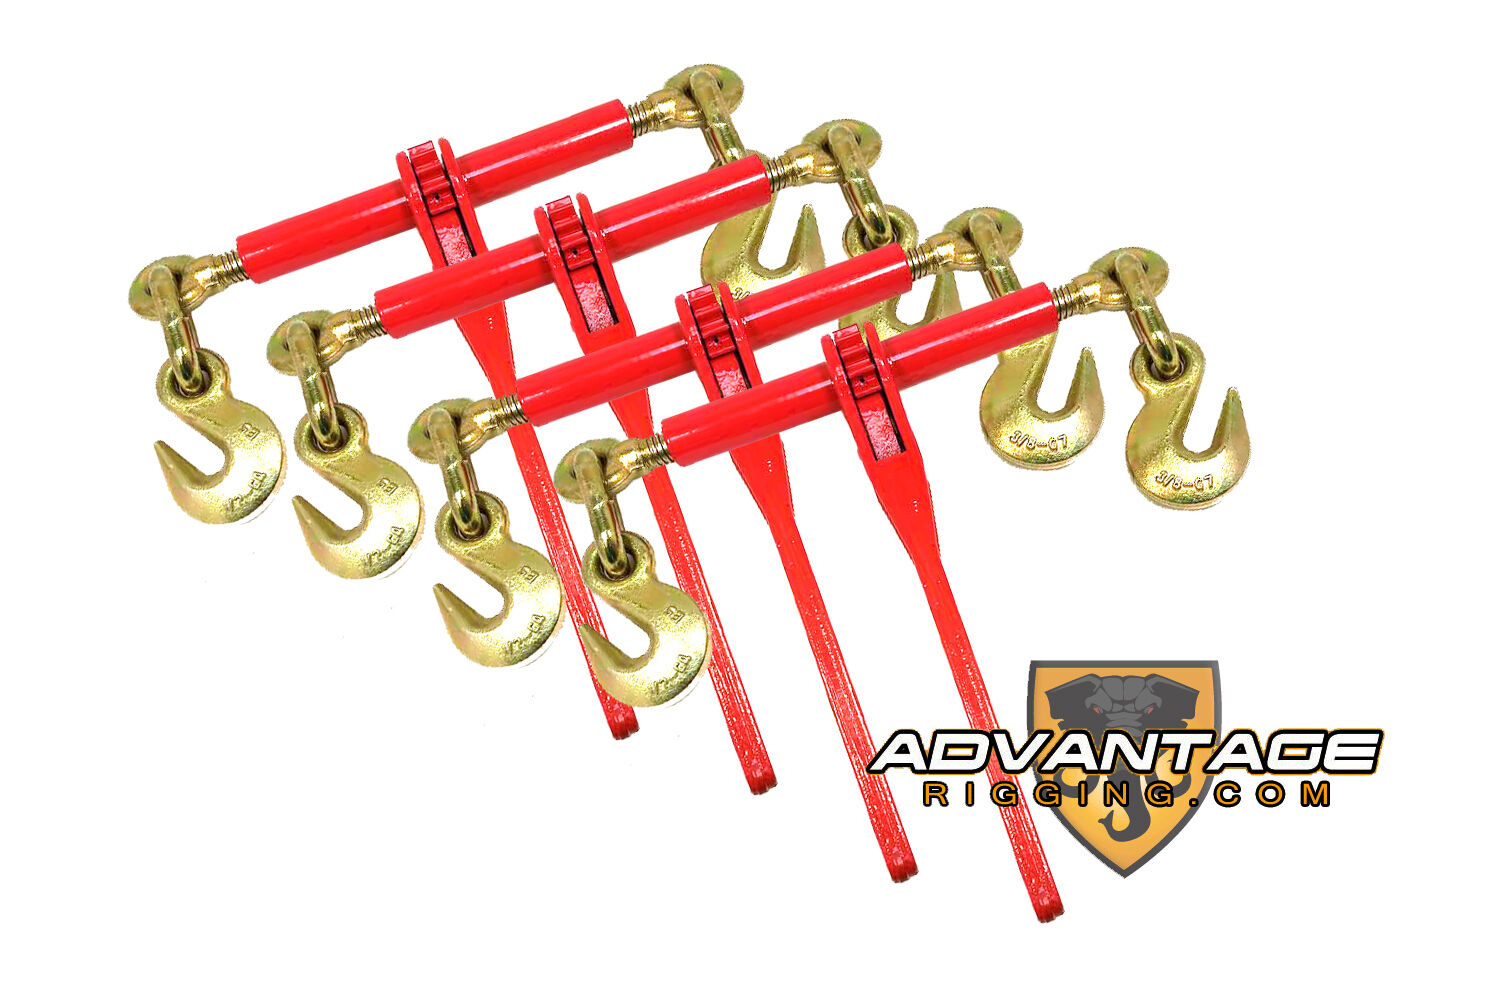 4 Ratchet Load Binders 3/8" - 1/2" Boomer Chain Equipment Tiedown Hauling